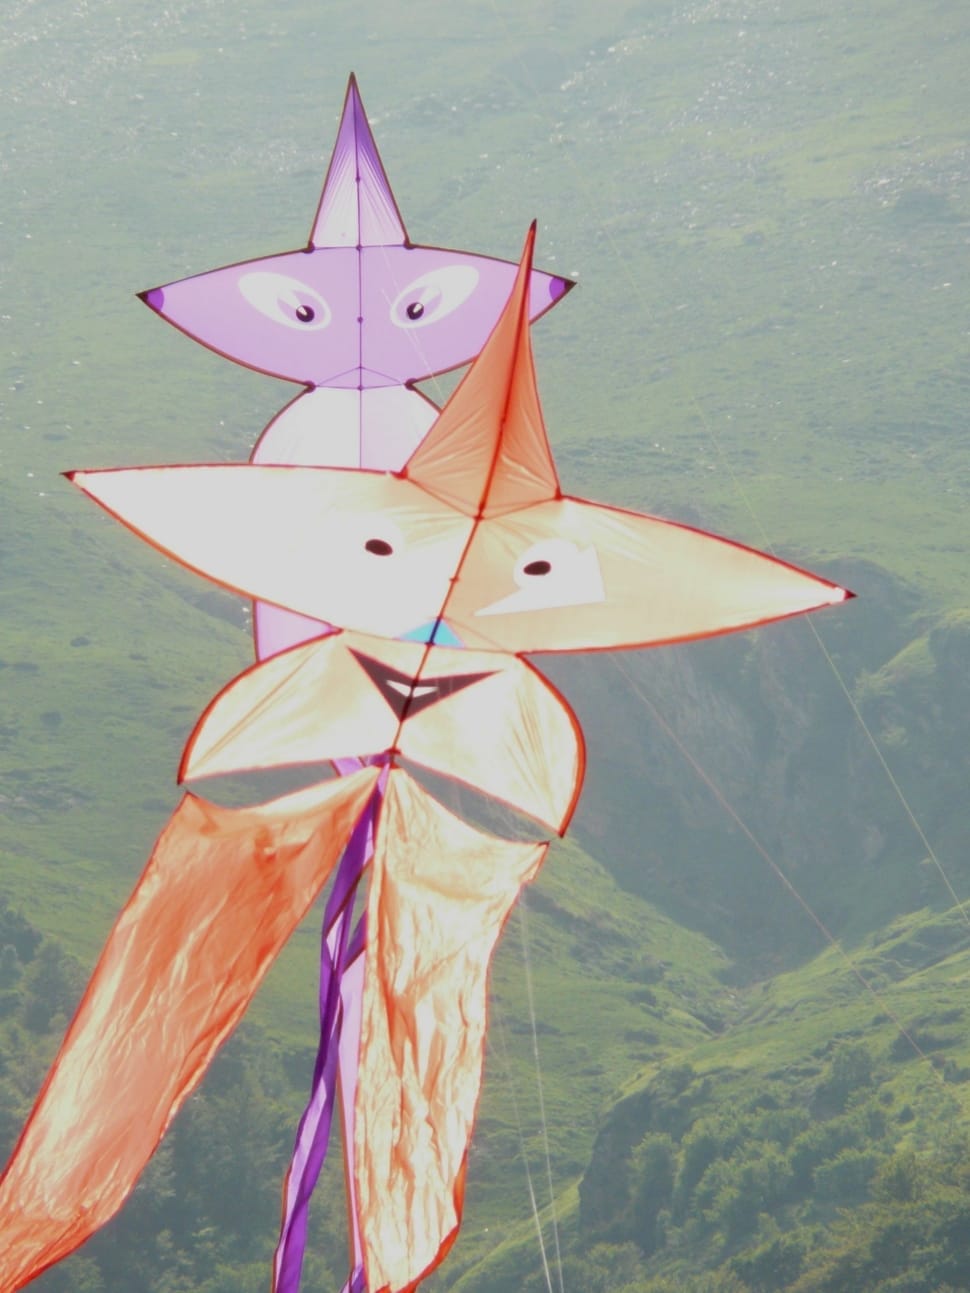 orange and purple star kites preview